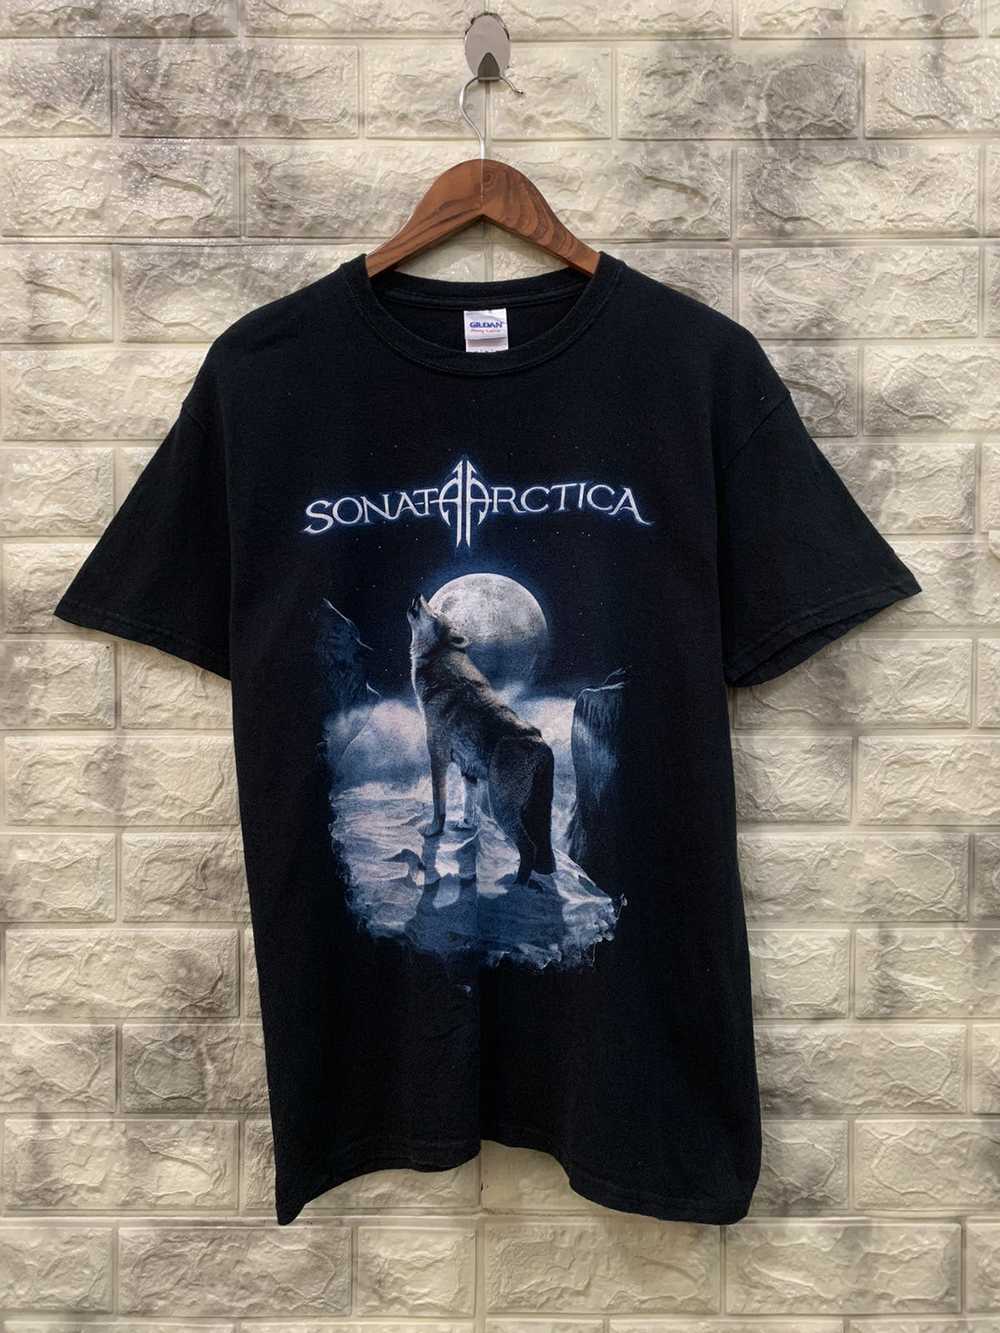 Vintage Sonata Arctica Metal Band T-Shirt - image 1